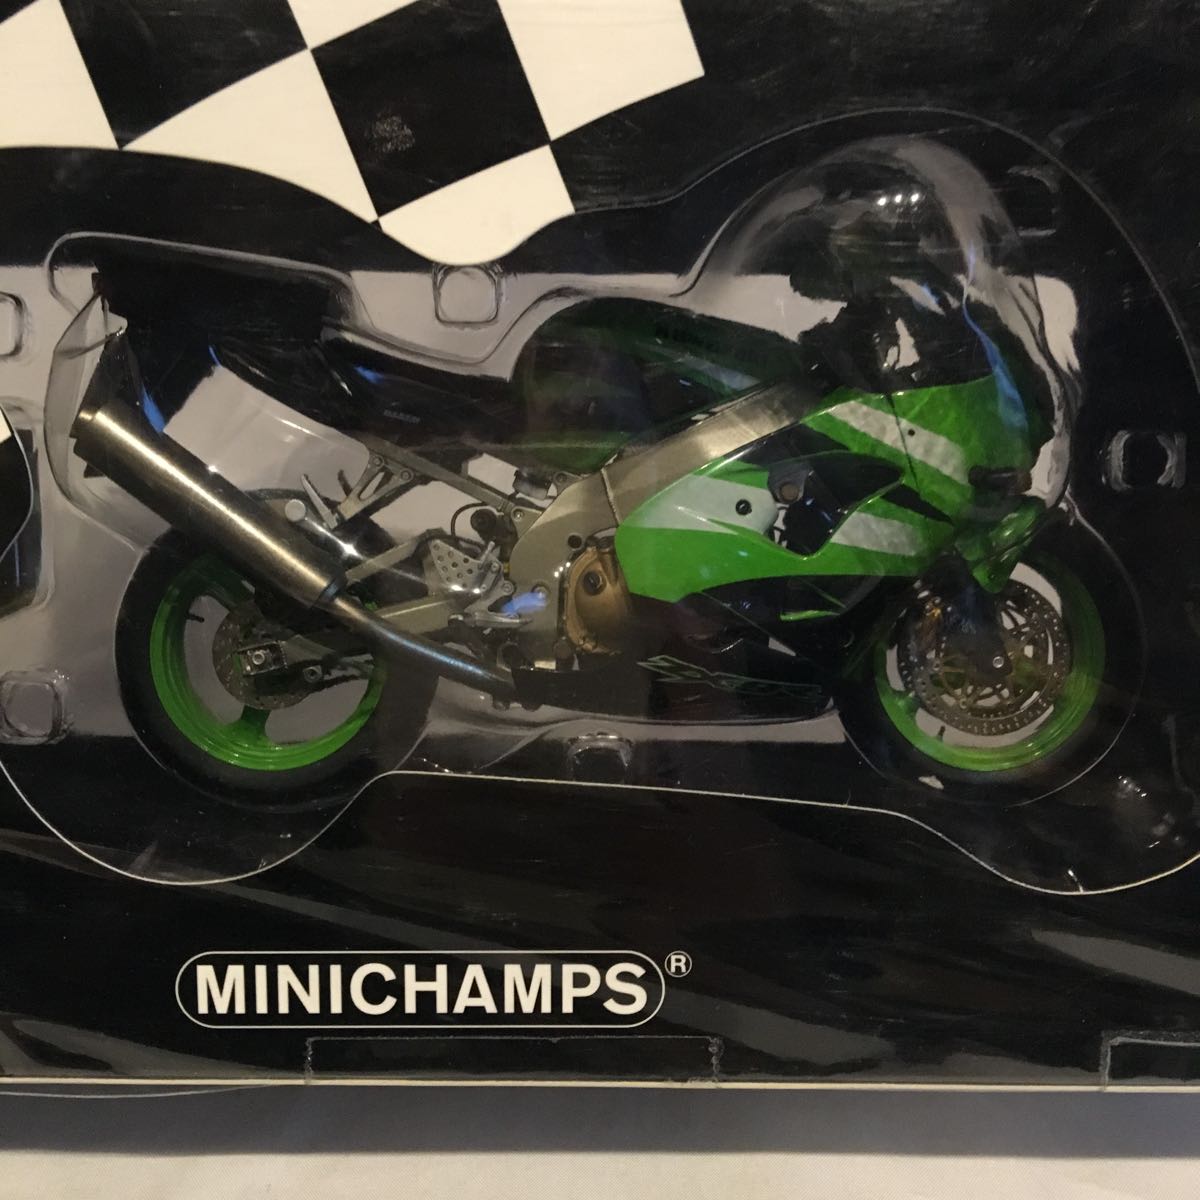 MINICHAMPS 1/12 Kawasaki Ninja ZX-9R ライムグリーン 完成品 バイク ミニカー モデルカー カワサキ ニンジャ ミニチャンプス_画像7